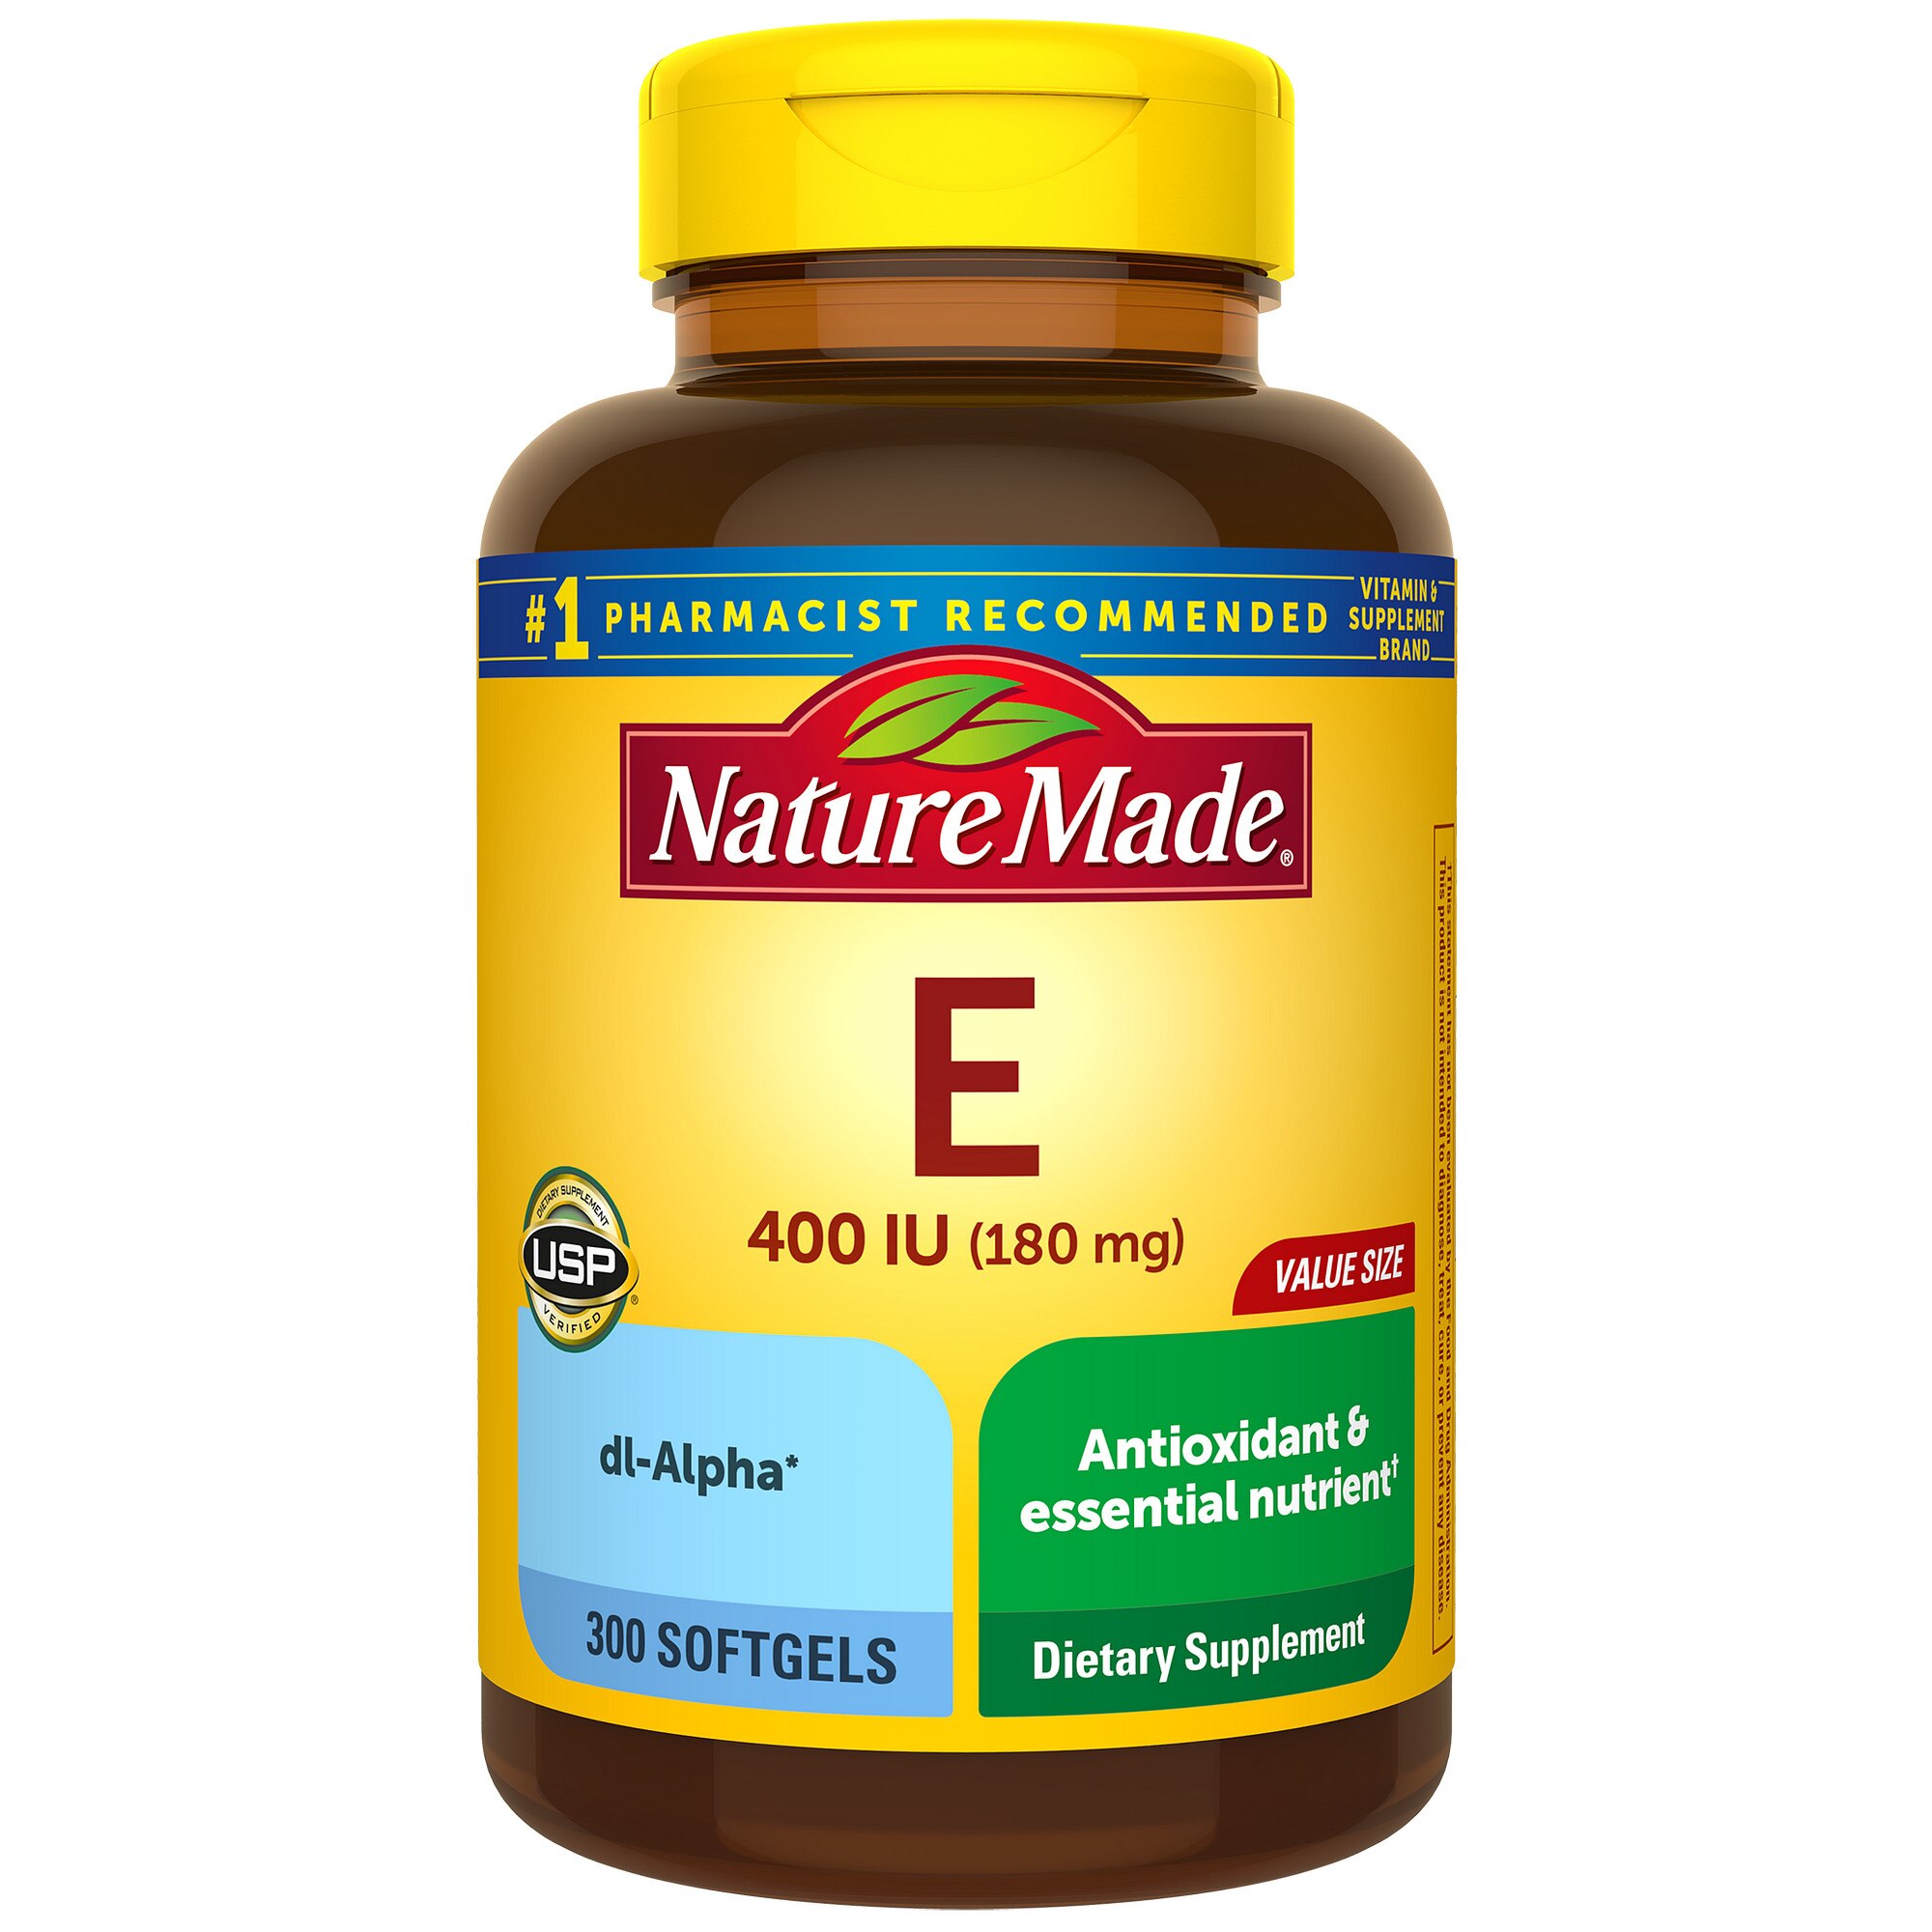 Nature Made Vitamin E 180 mg (400 IU) dl-Alpha Antioxidant Support Softgels, 300 CT